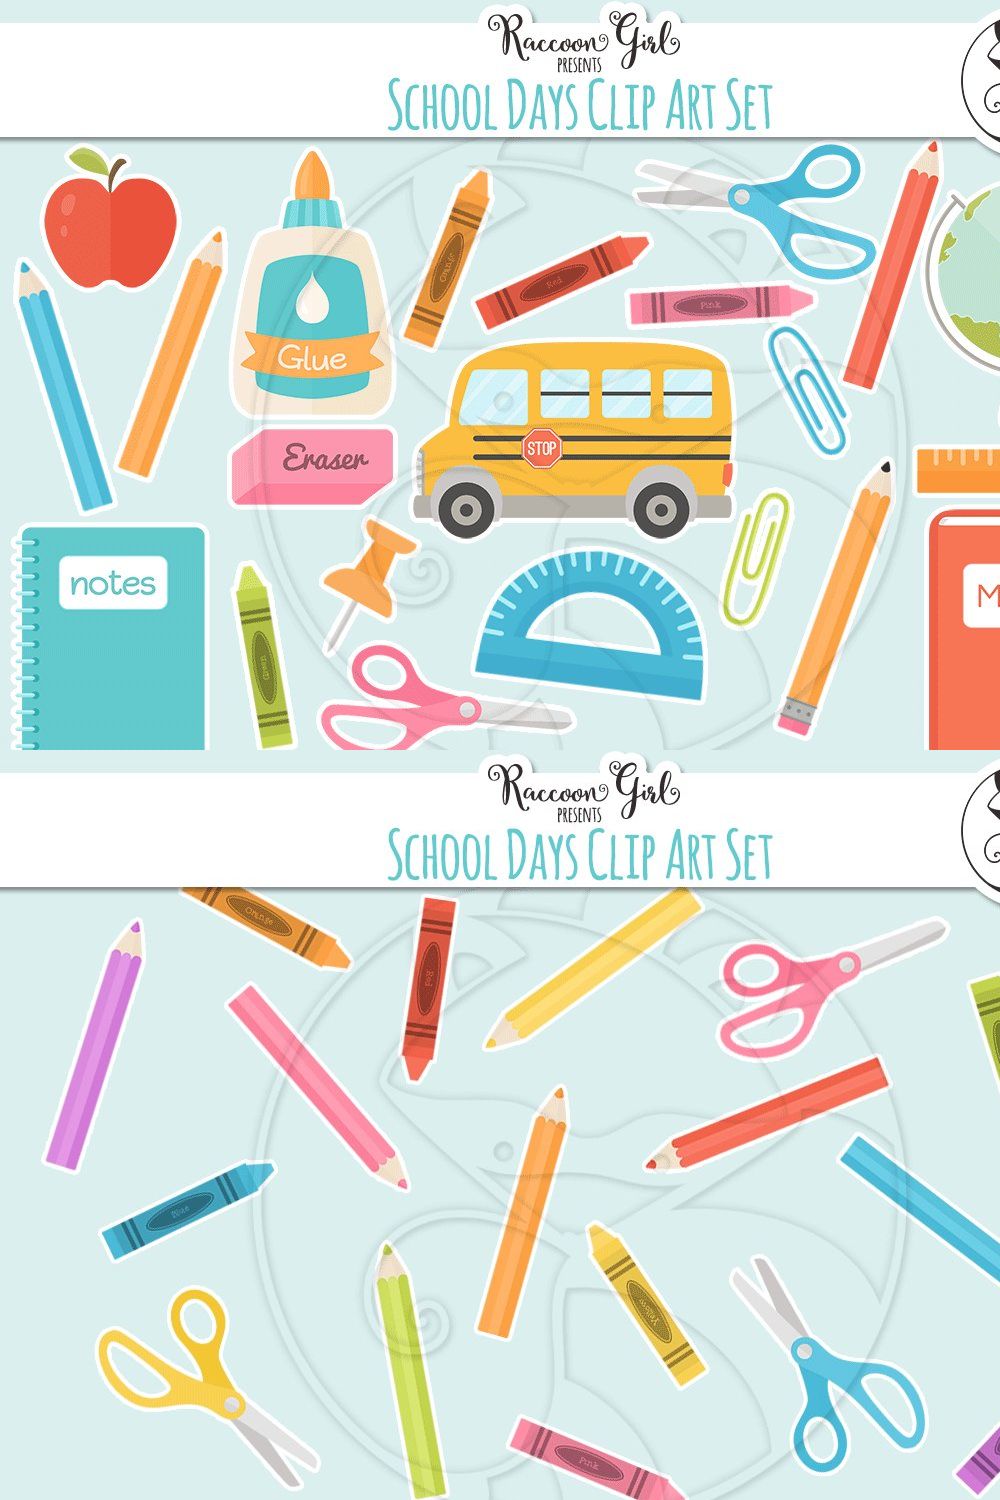 School Days Clipart Set pinterest preview image.